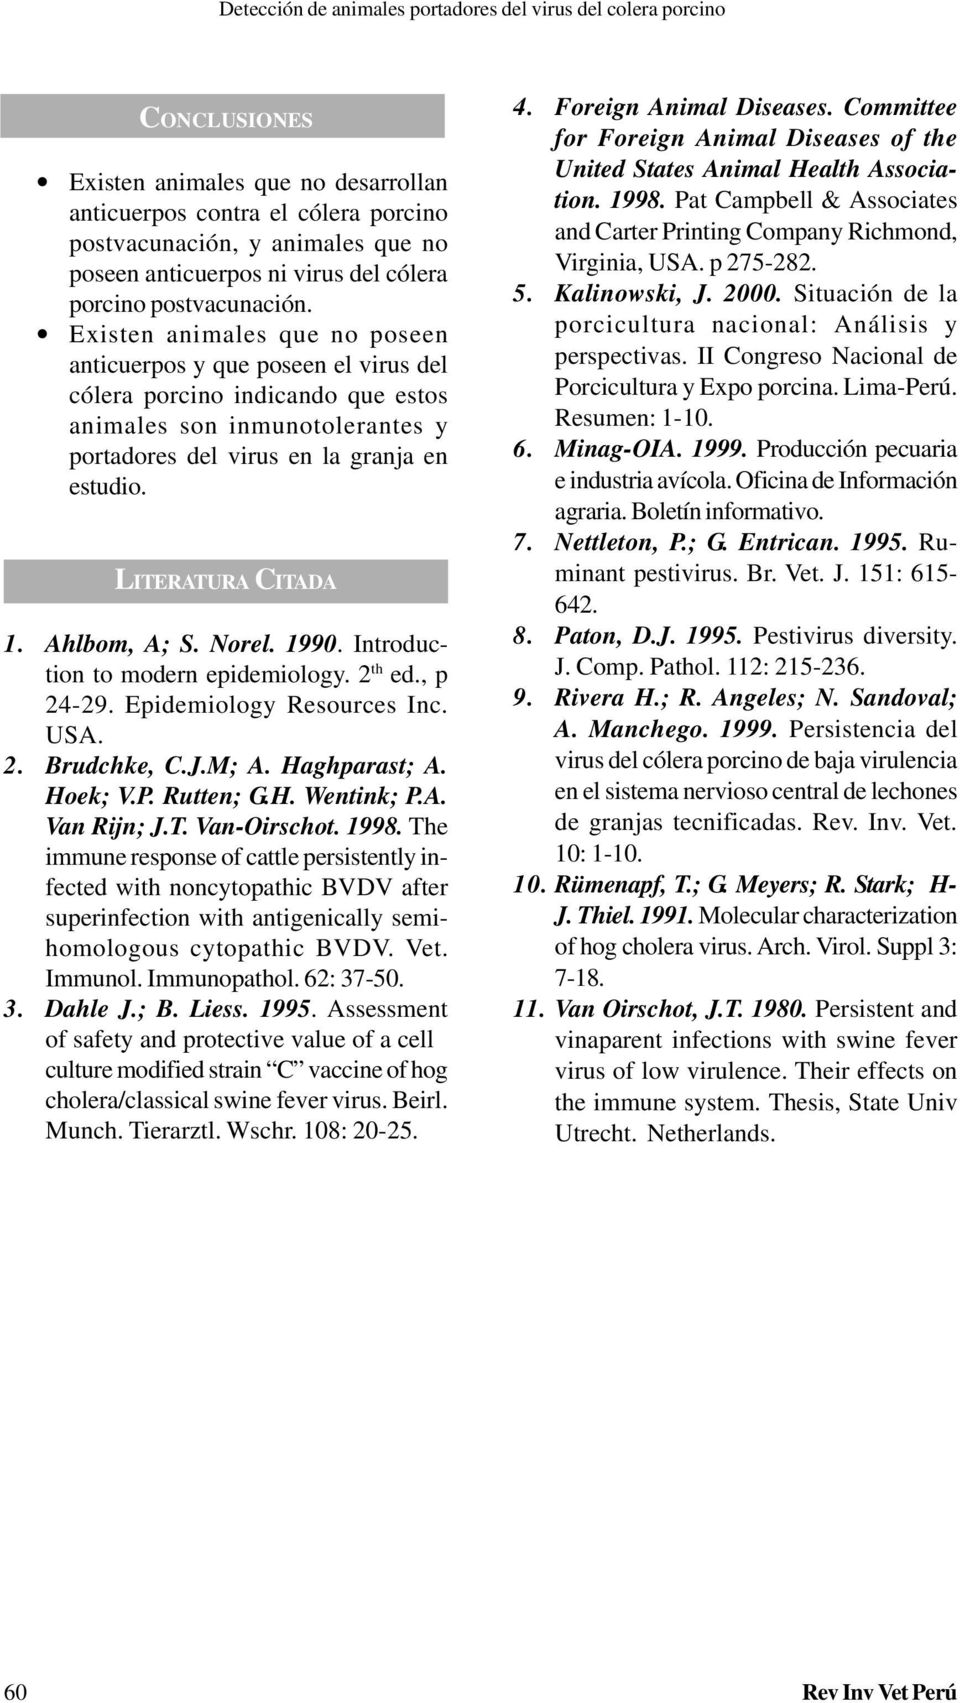 LITERATURA CITADA 1. Ahlbom, A; S. Norel. 1990. Introduction to modern epidemiology. 2 th ed., p 24-29. Epidemiology Resources Inc. USA. 2. Brudchke, C.J.M; A. Haghparast; A. Hoek; V.P. Rutten; G.H. Wentink; P.